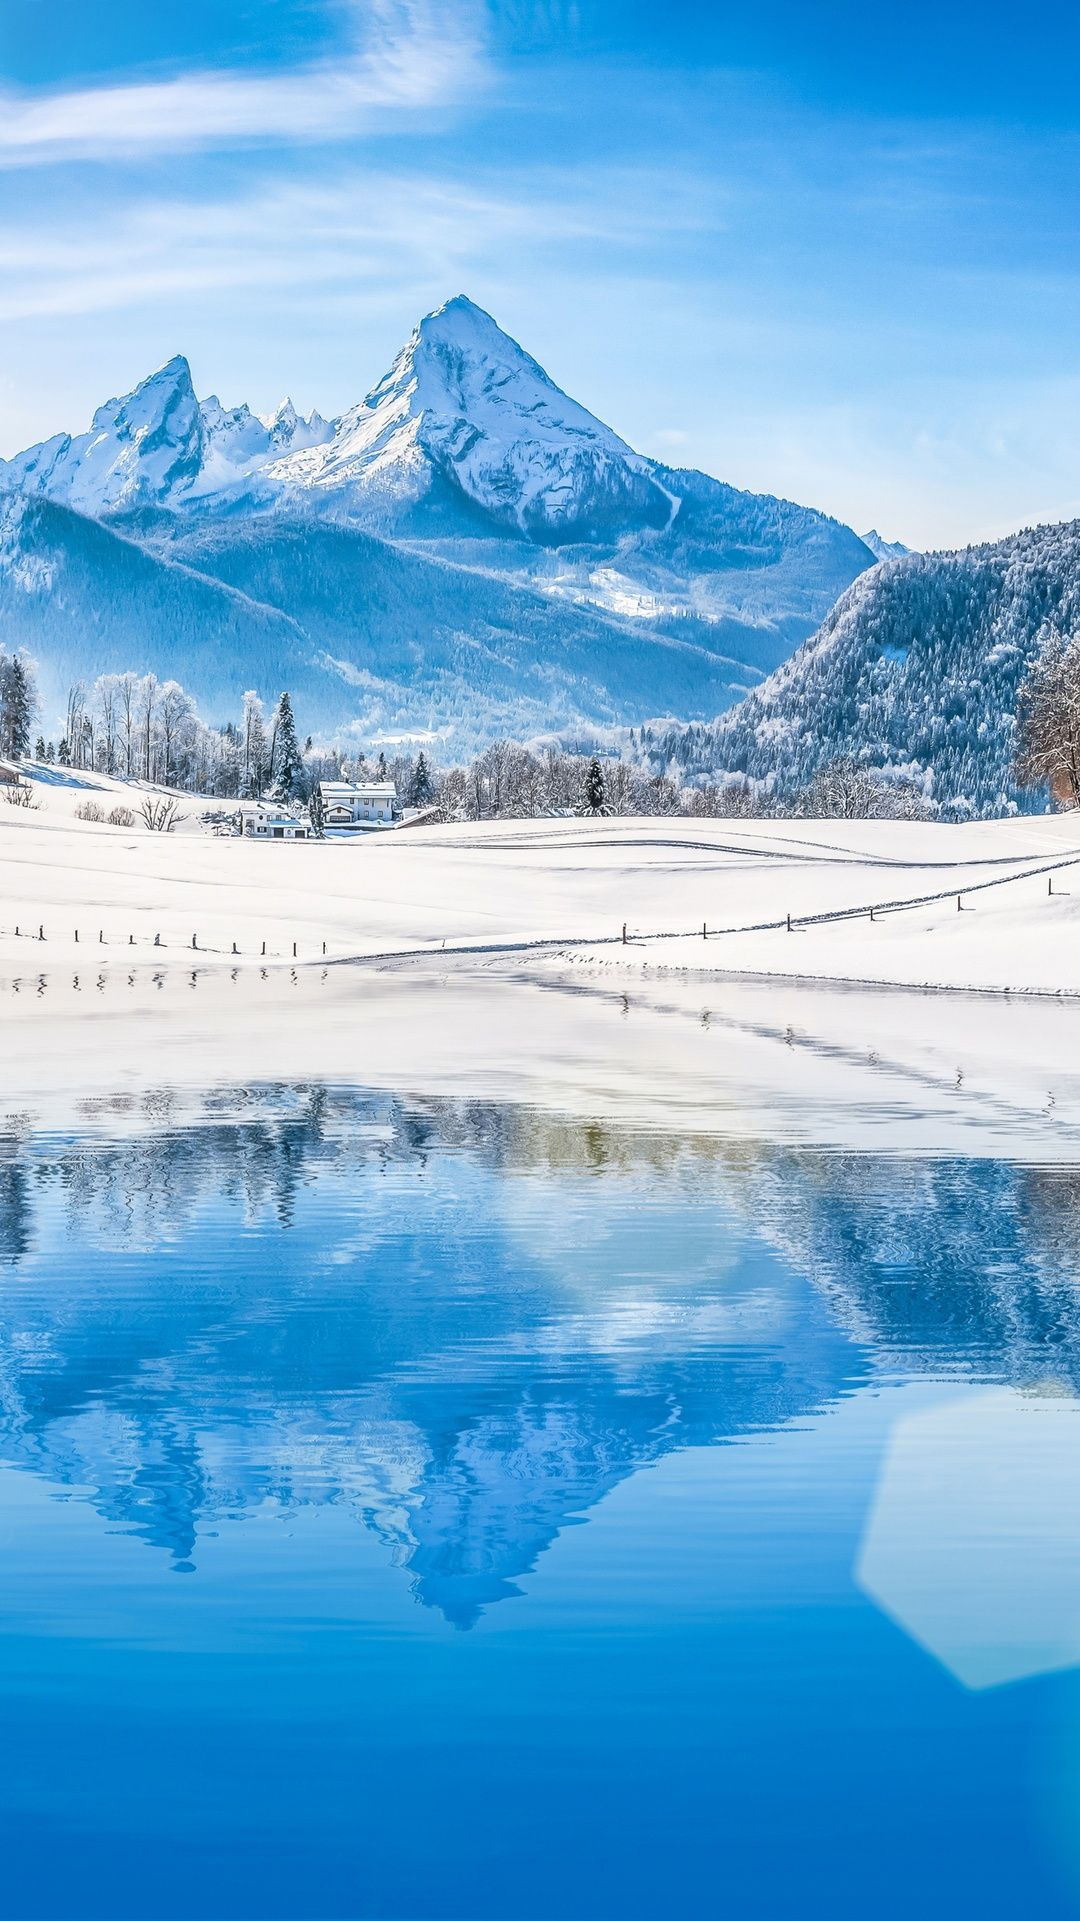 Winter Landscape With Blue Lake 4K Ultra HD Wallpaper Wallpaper.Net. Best Iphone Wallpaper, Blue Lake, IPhone Wallpaper